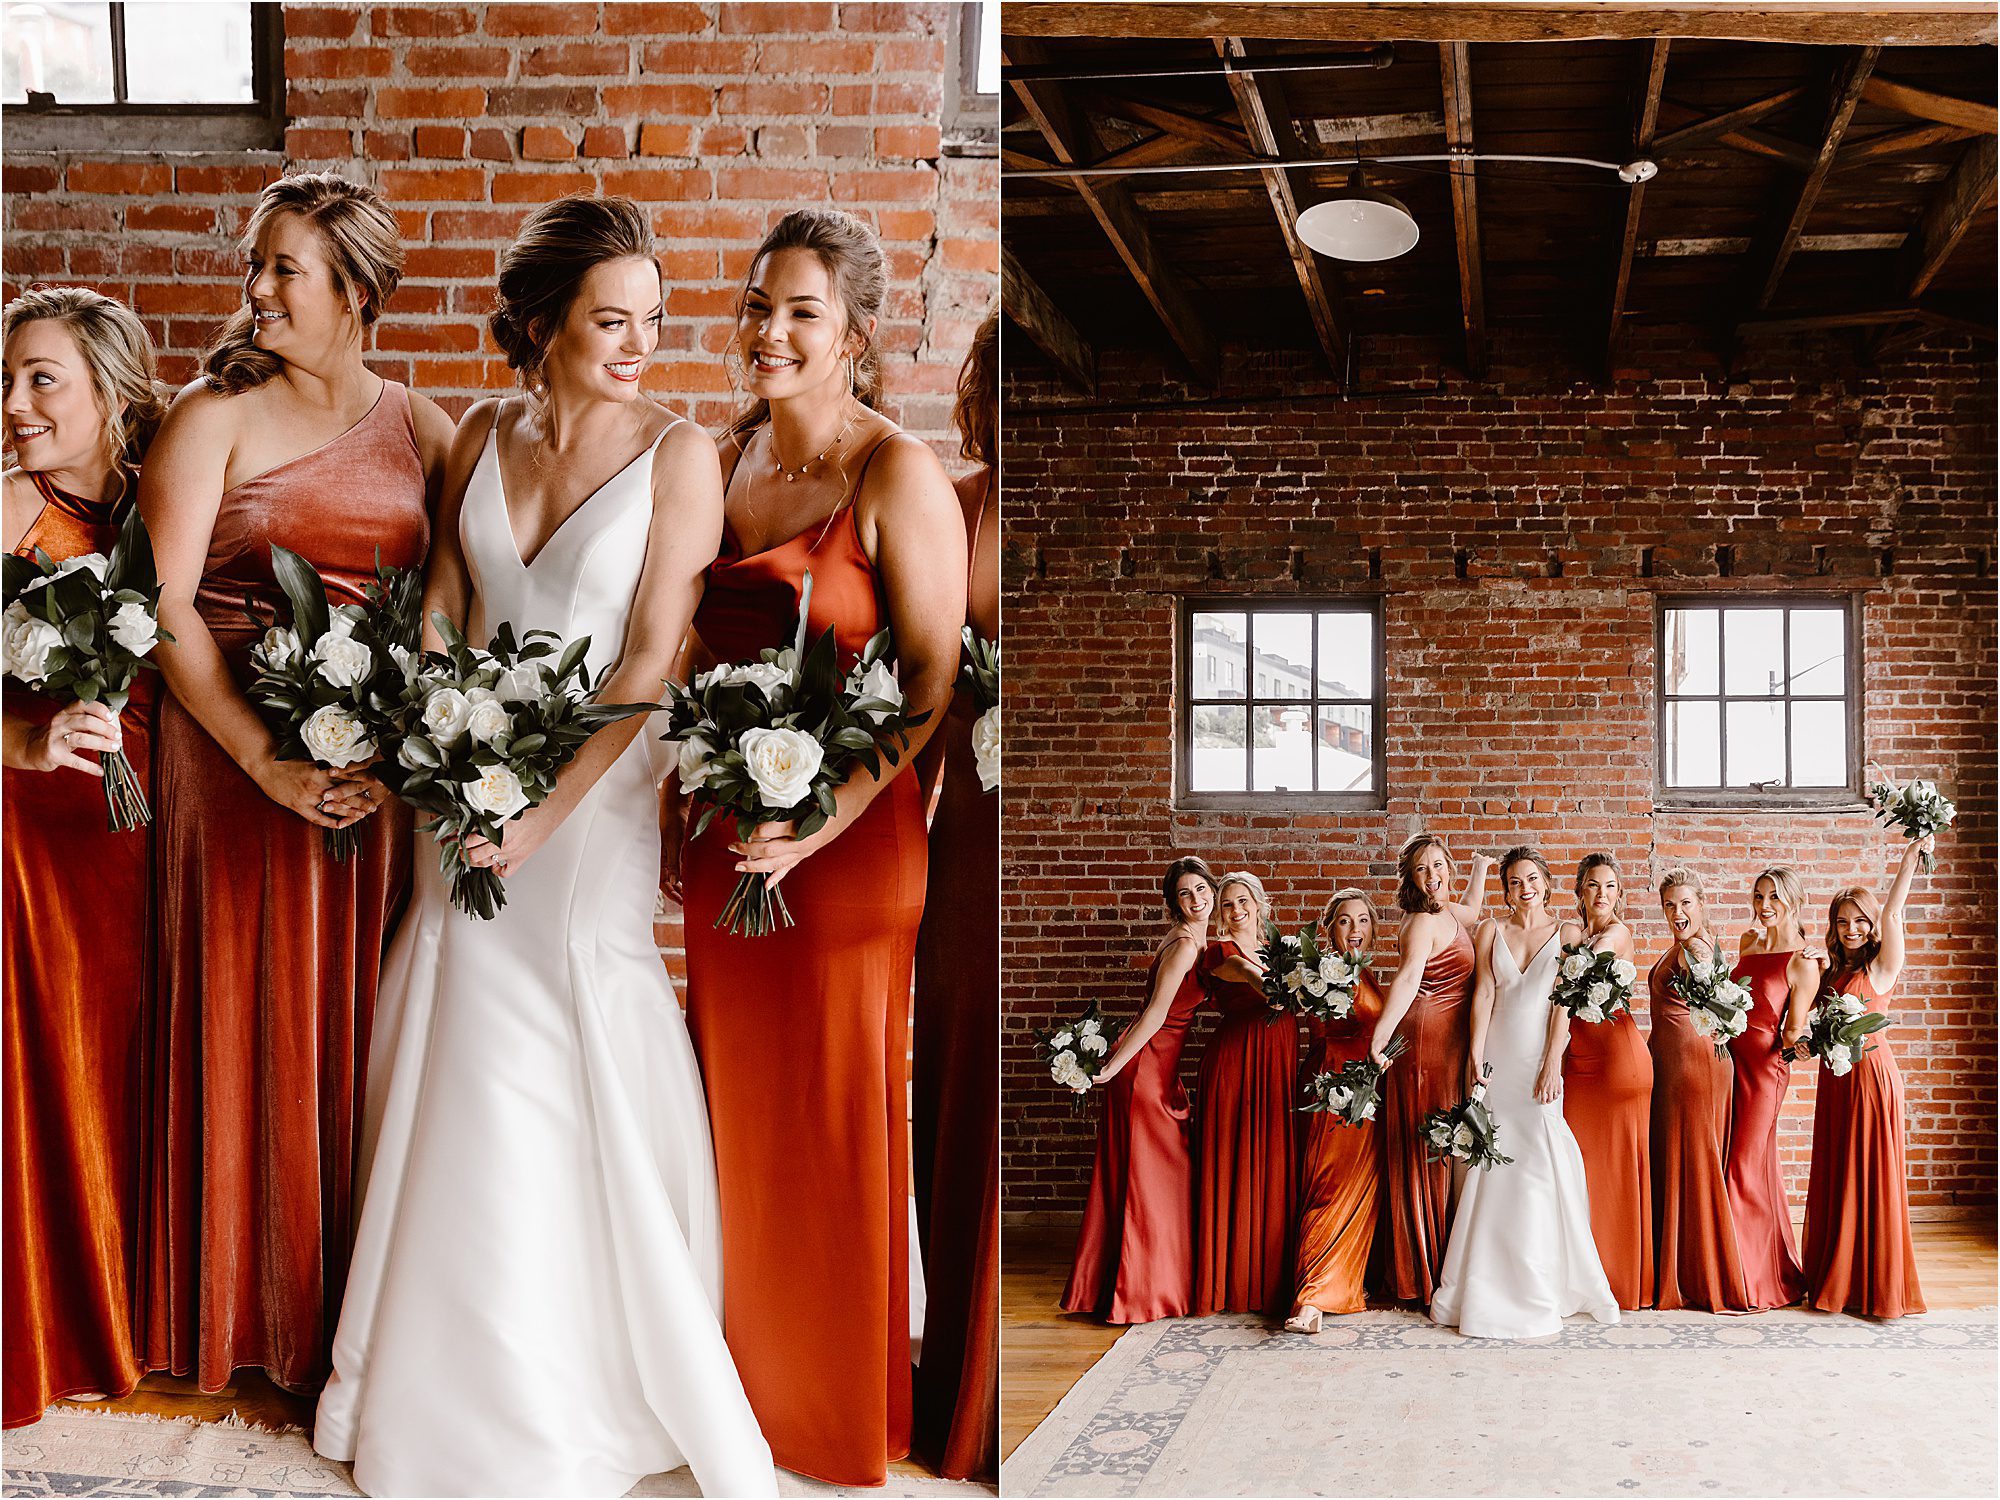 bride and bridesmaid photos with orange dresses